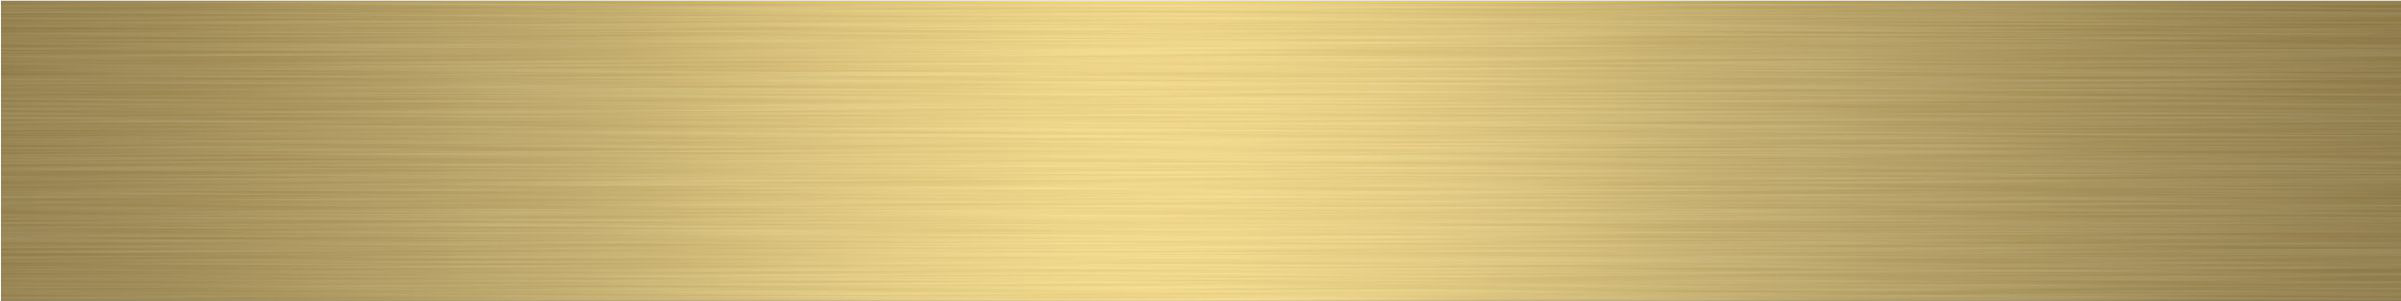 Placa de nombre de oro PNG imagen Transparente